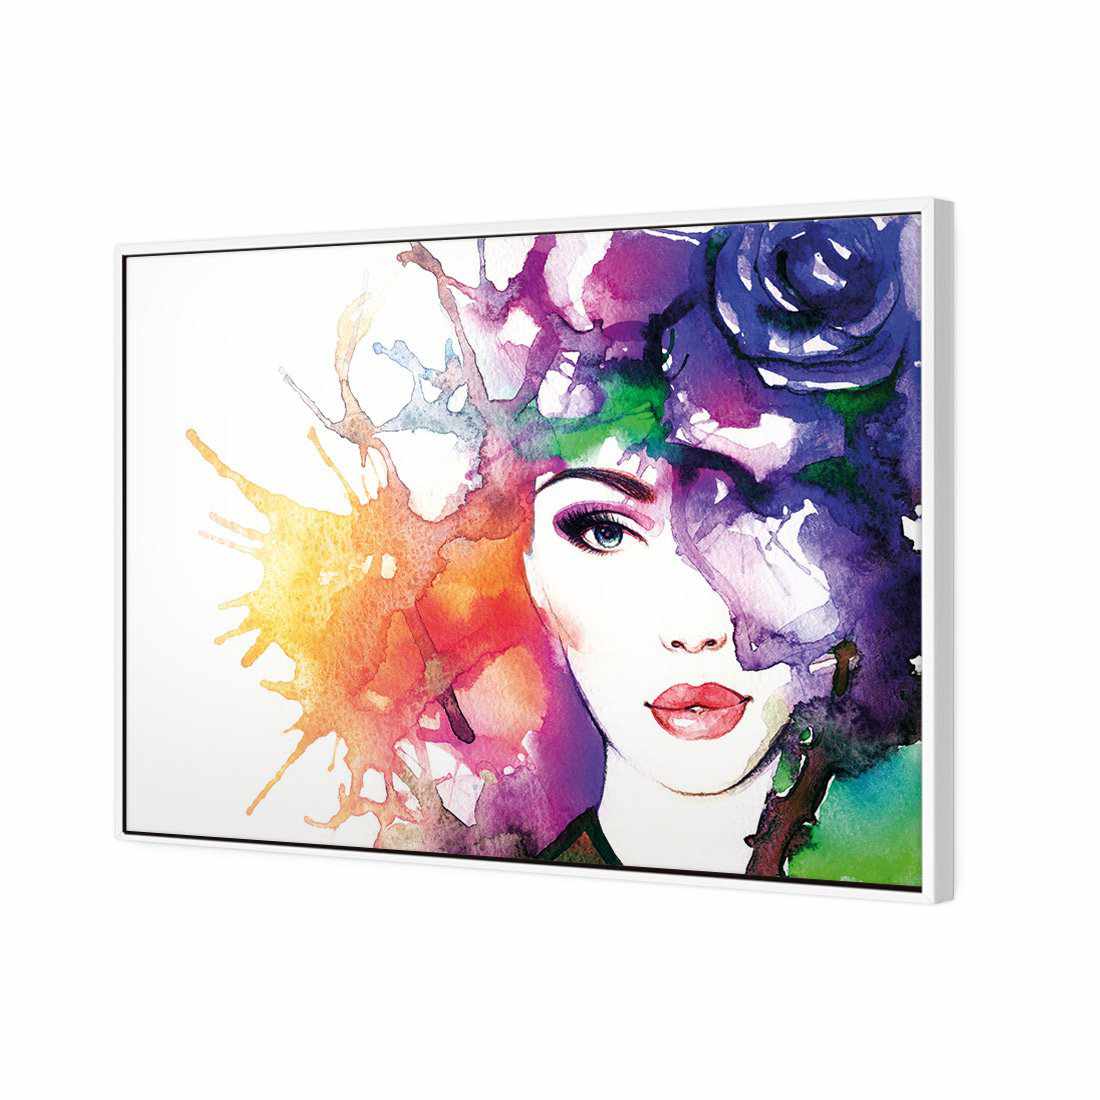 Mystic Rose Woman 2 Canvas Art-Canvas-Wall Art Designs-45x30cm-Canvas - White Frame-Wall Art Designs